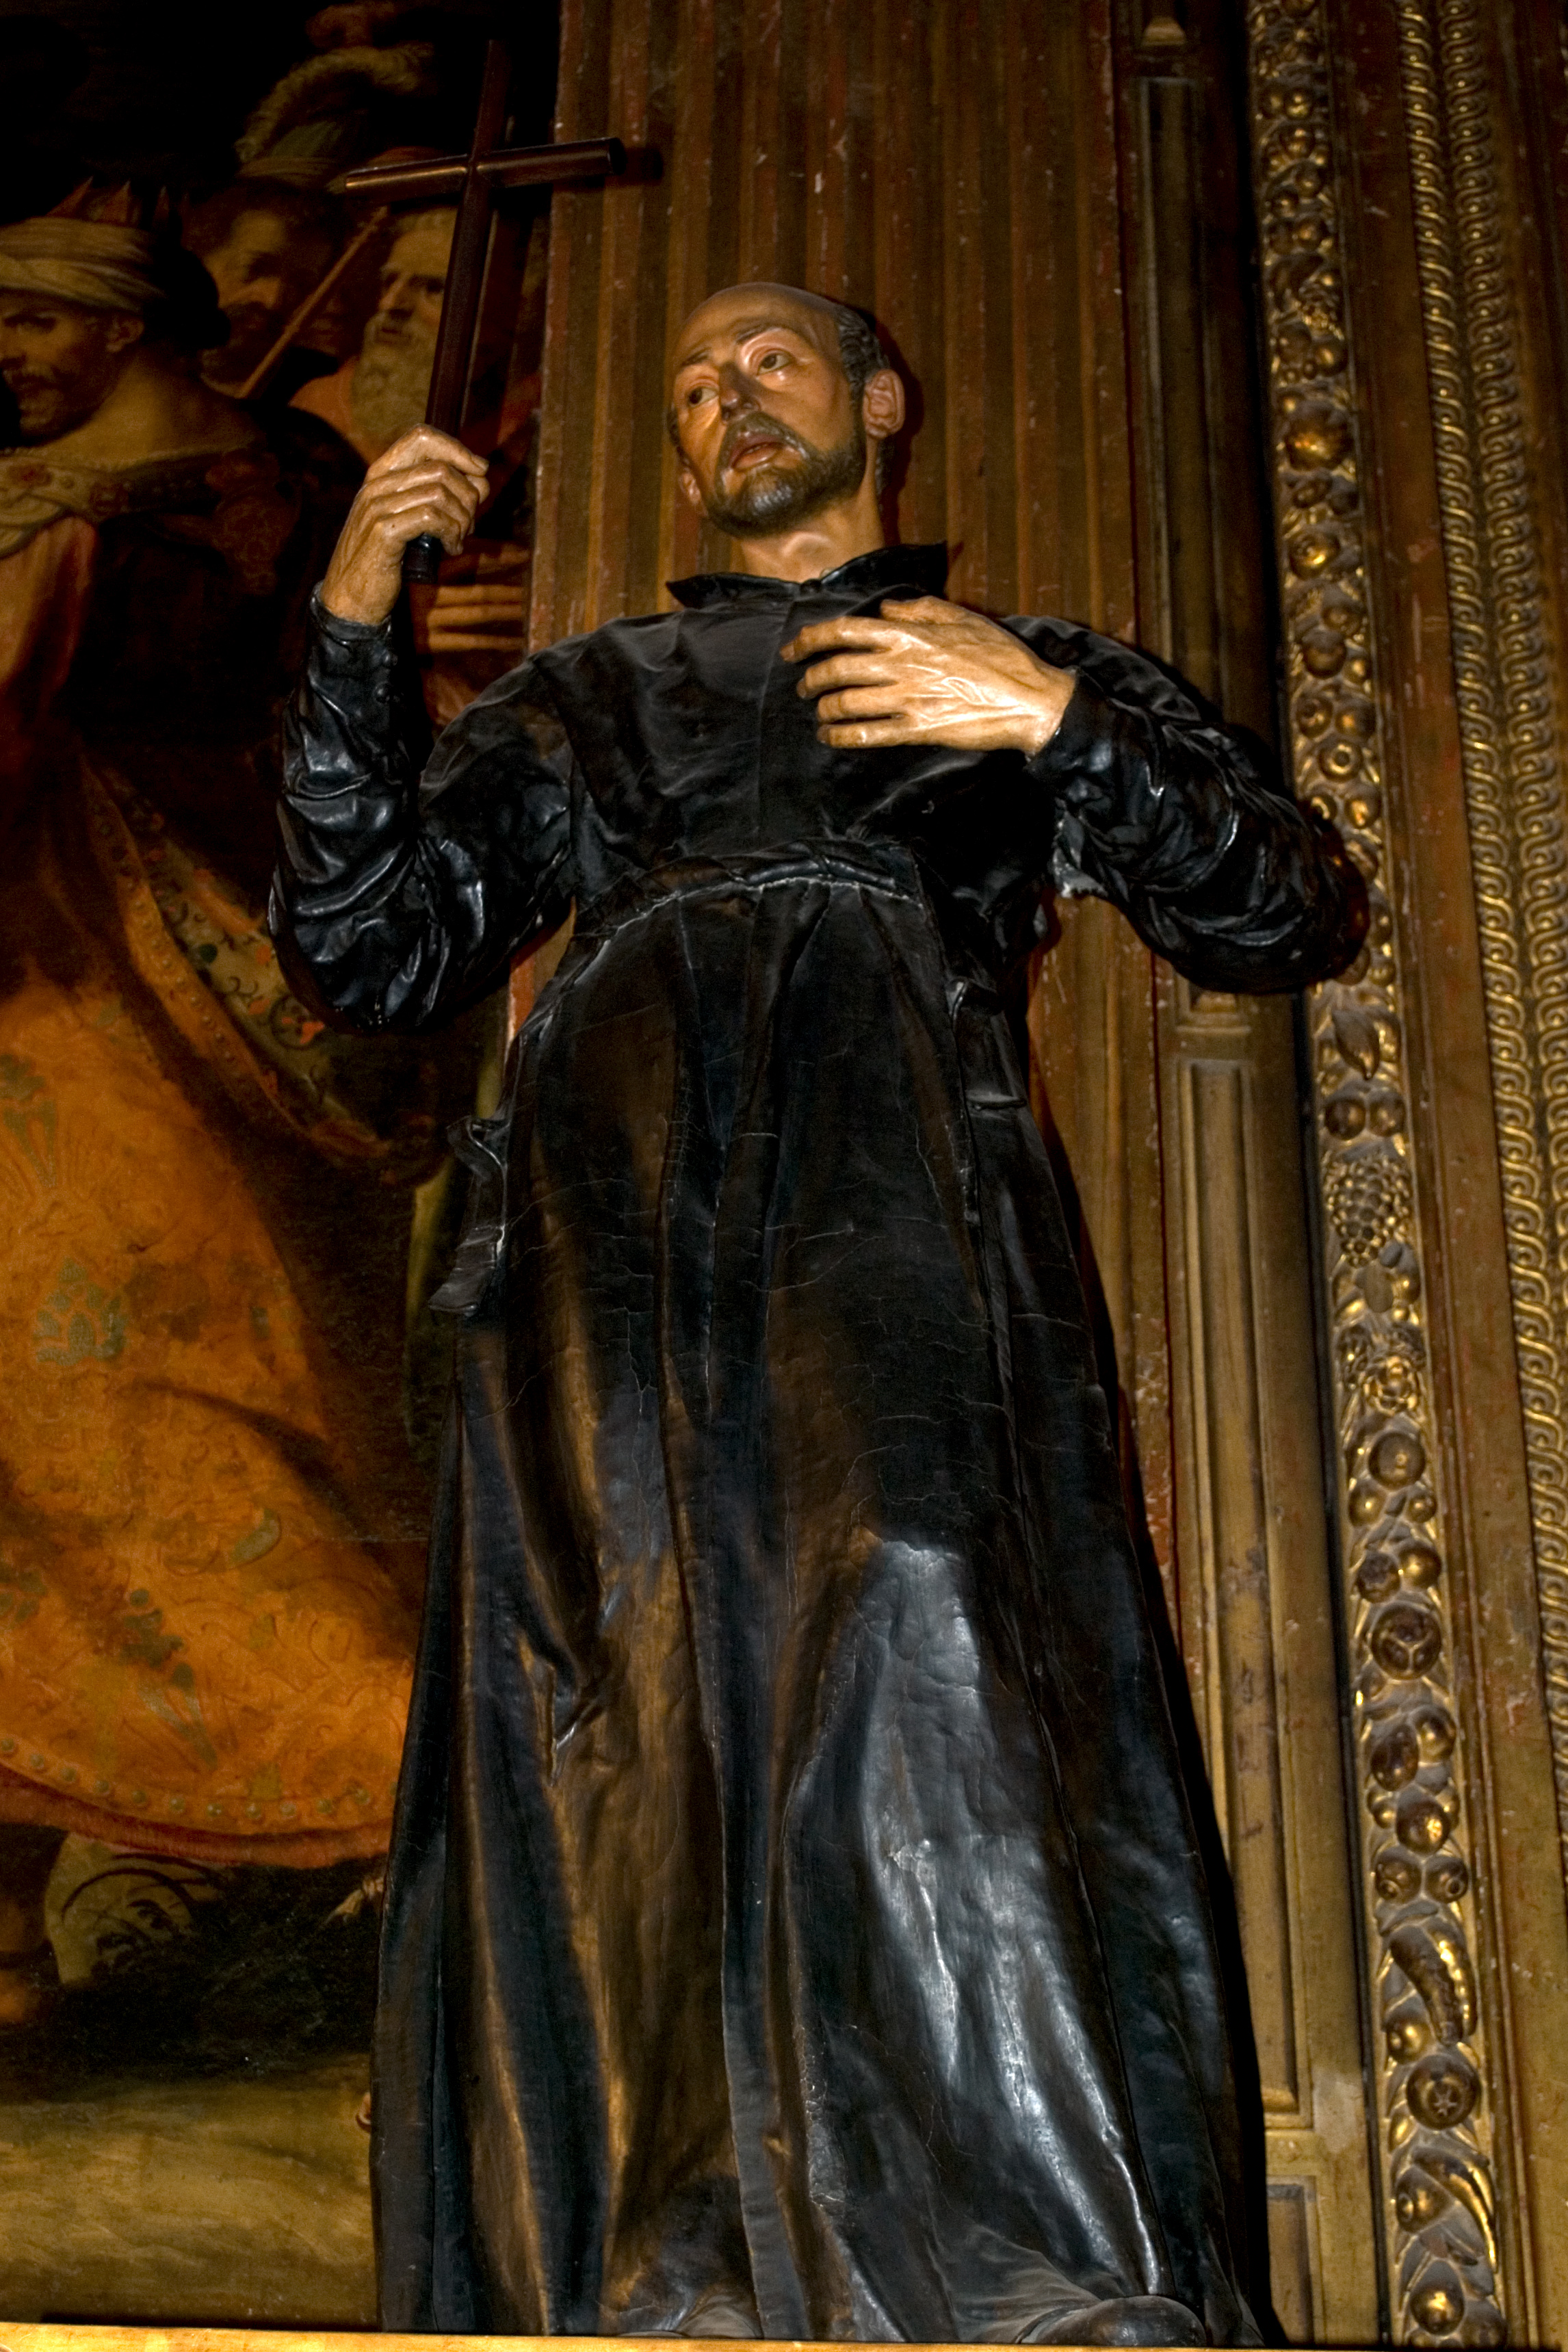 Juan Martínez Montañés (1568-1649) / Francisco Pacheco (1564-1644), San Ignacio de Loyola, Statue aus polychromiertem Holz, 1610, Iglesia de la Anunciación, Sevilla; Bildquelle: Wikimedia Commons, http://commons.wikimedia.org/wiki/File:San_Ignacio_de_Loyola_001.jpg